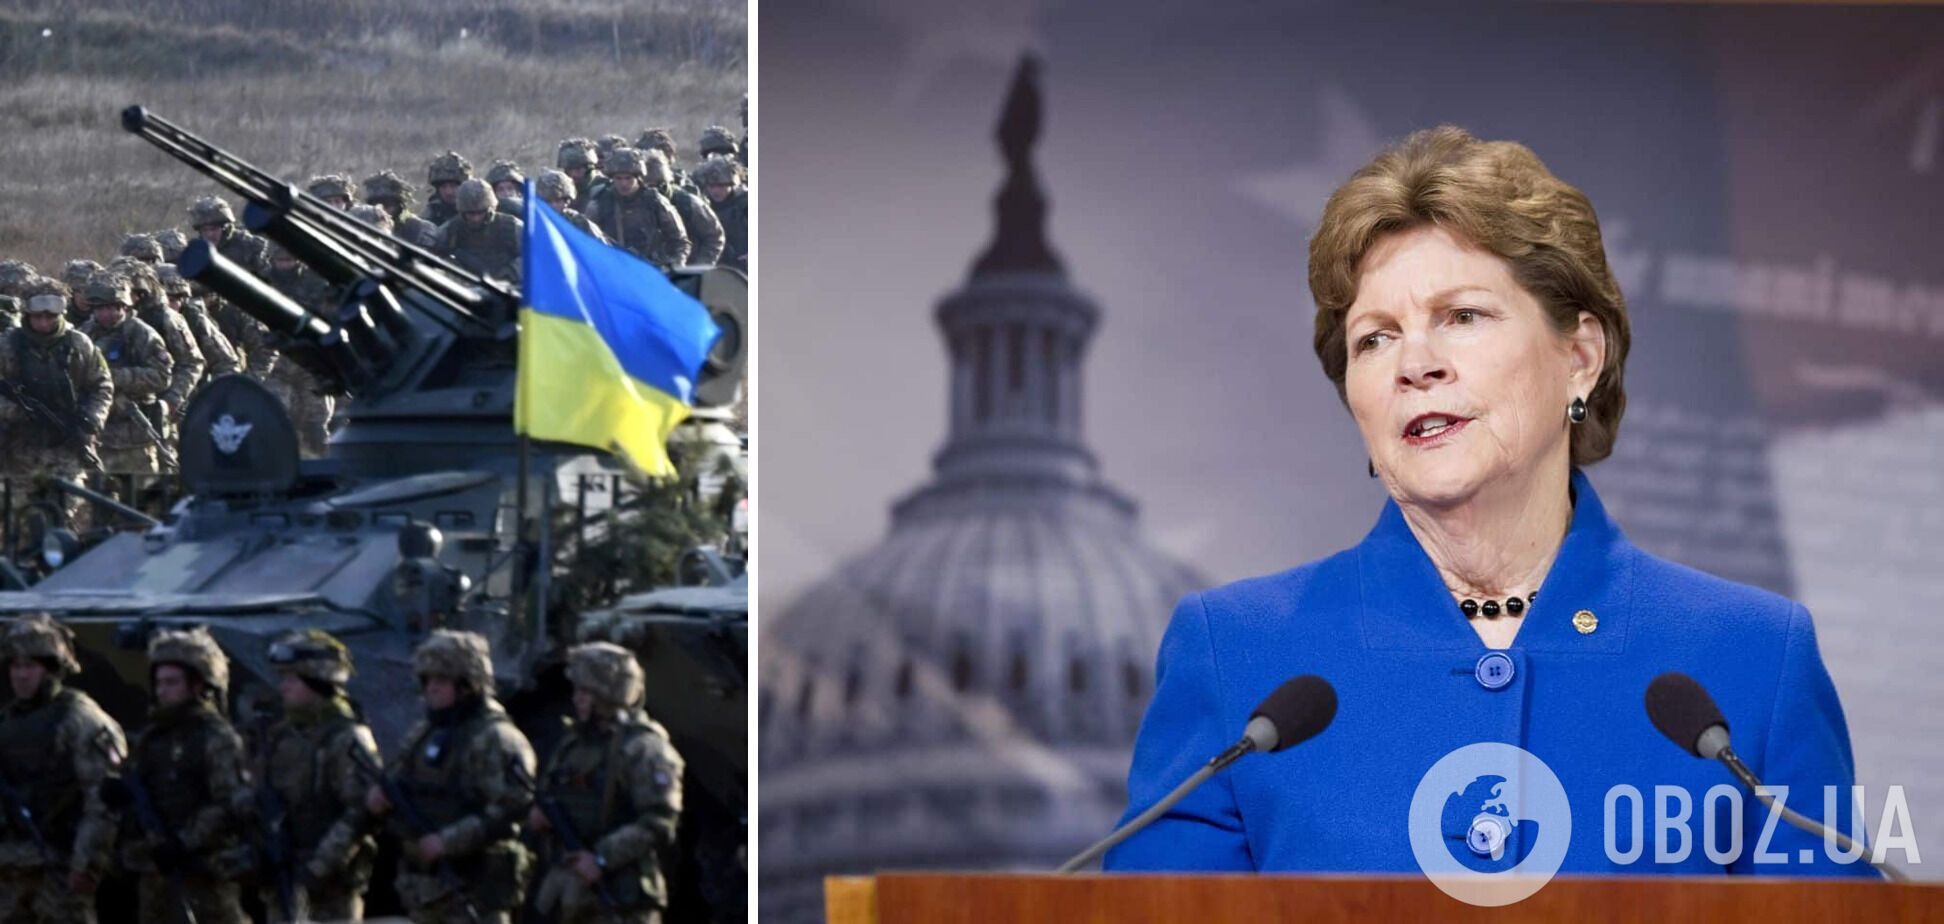 Законопроект о ленд-лизе для Украины представила сенатор Джин Шахин